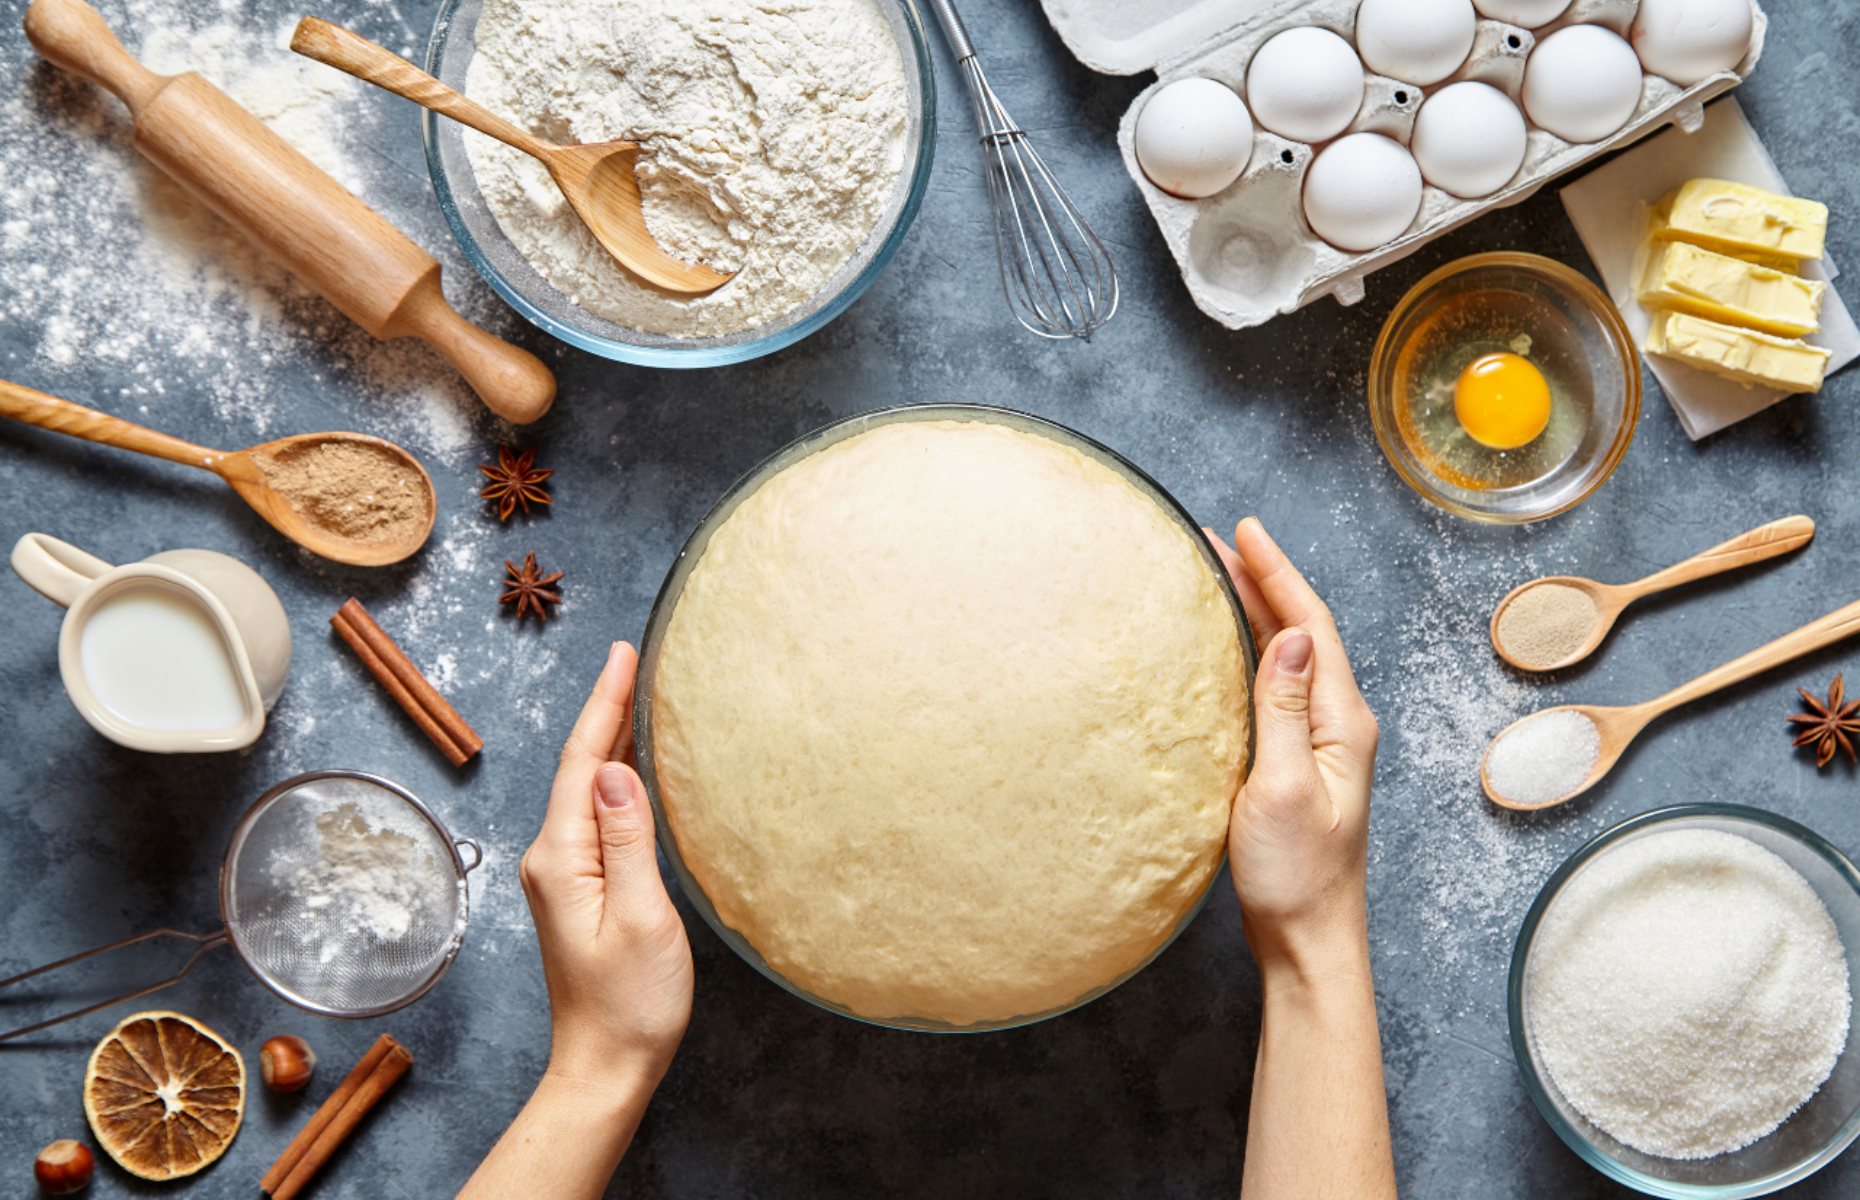 Cake making (Image: GreenArt/Shutterstock)